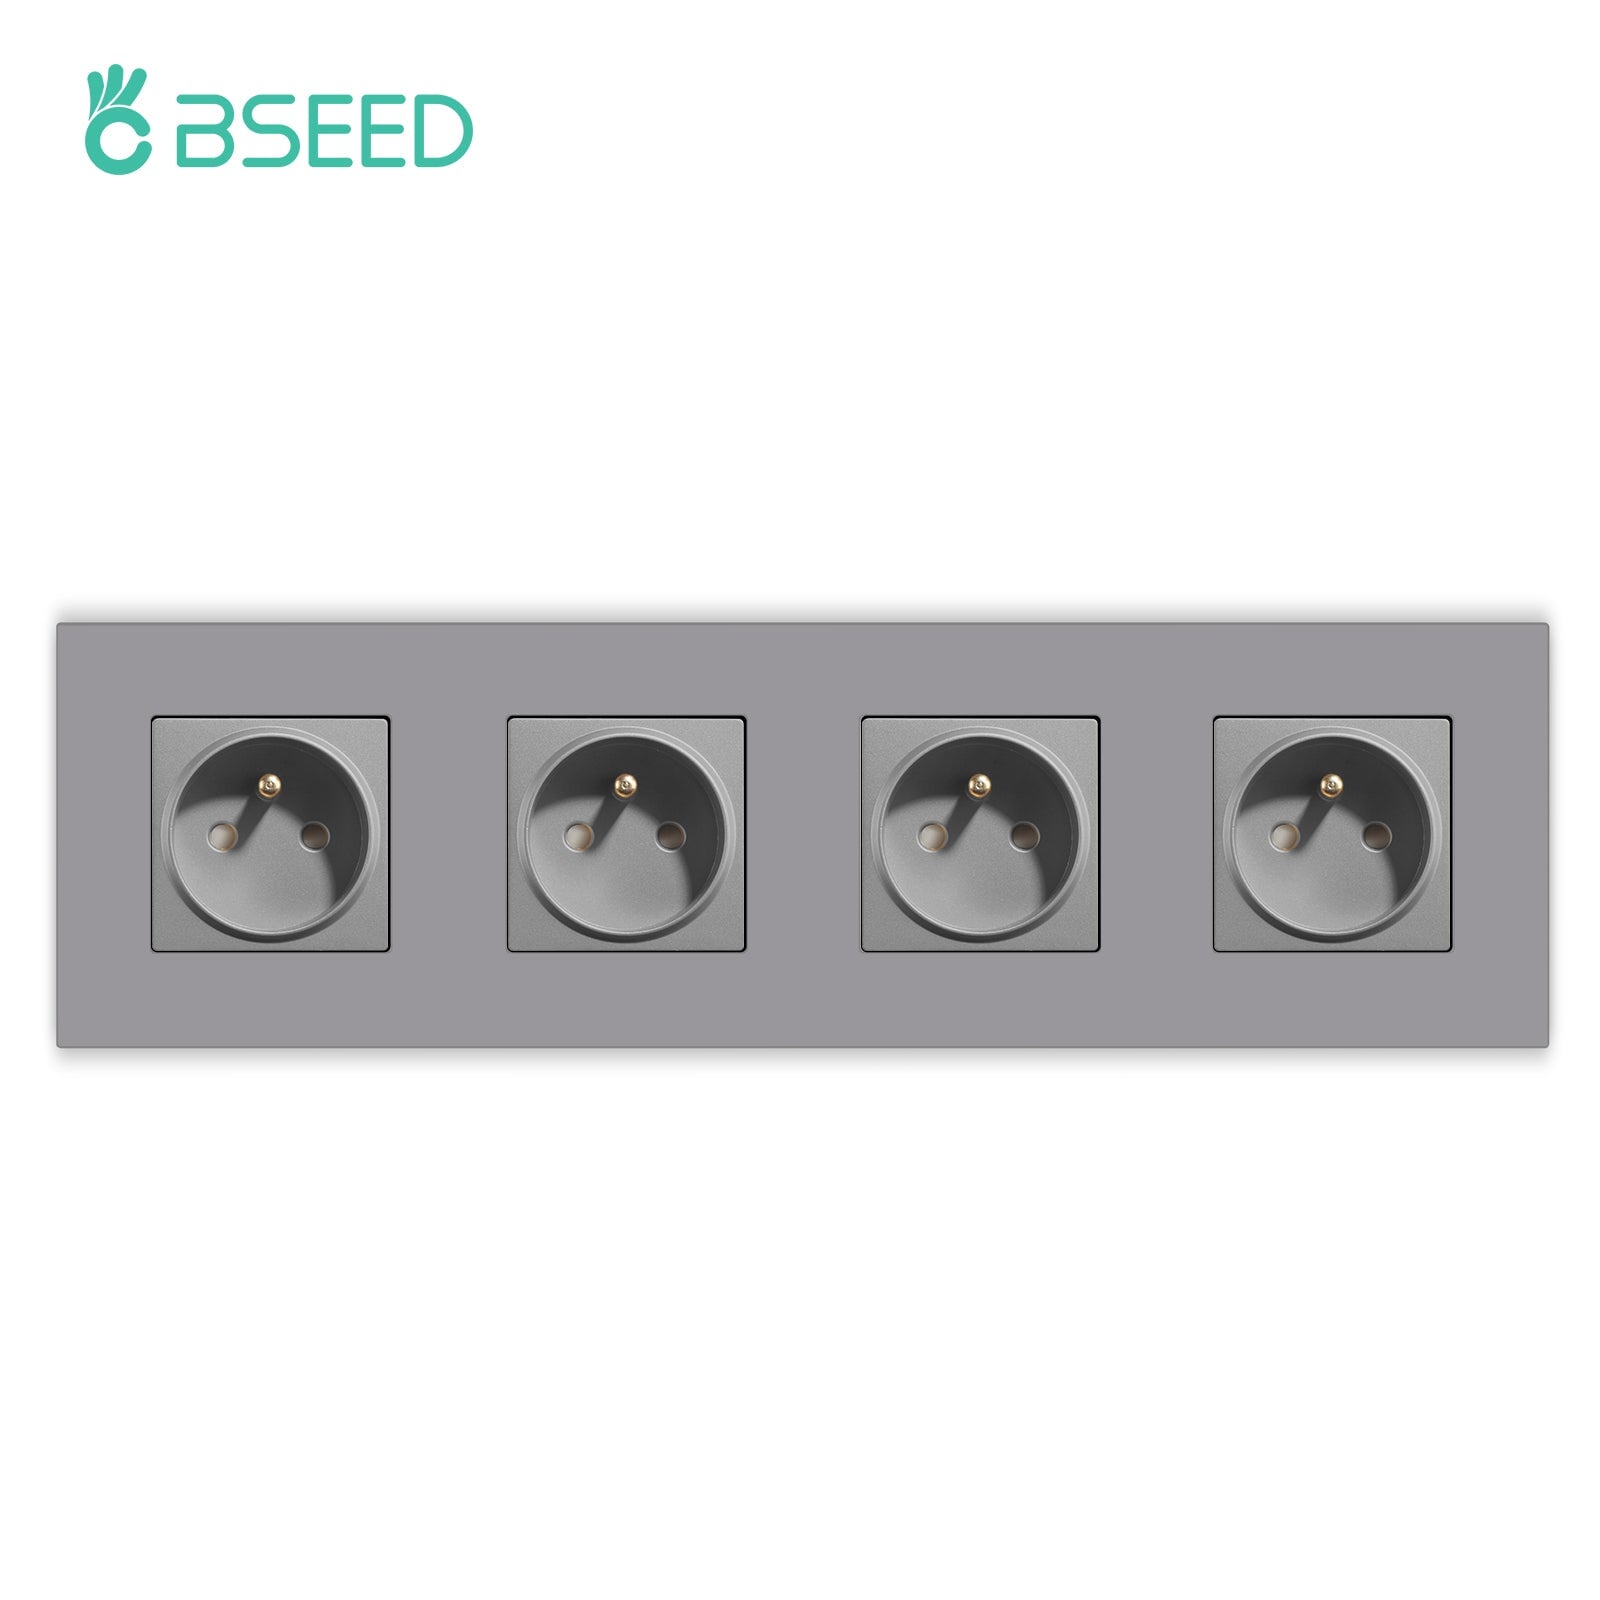 BSEED EU/FR/MF standard wall socket built-in plastic frame 16A Power Outlets & Sockets Bseedswitch 